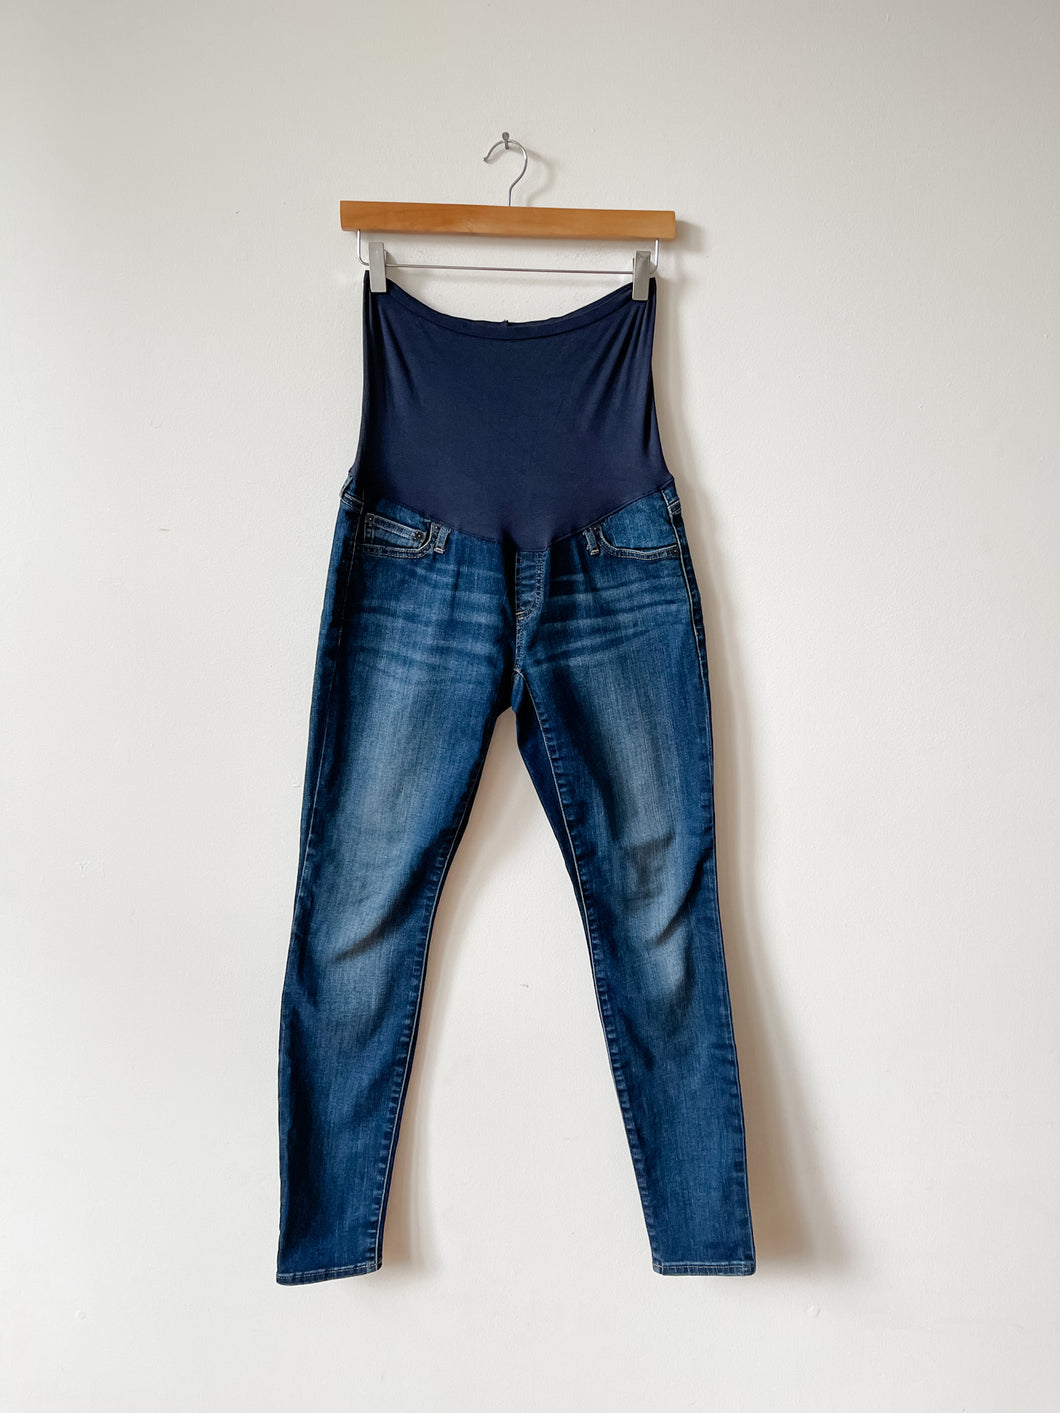 Maternity Blue Gap Jeans Size 4r